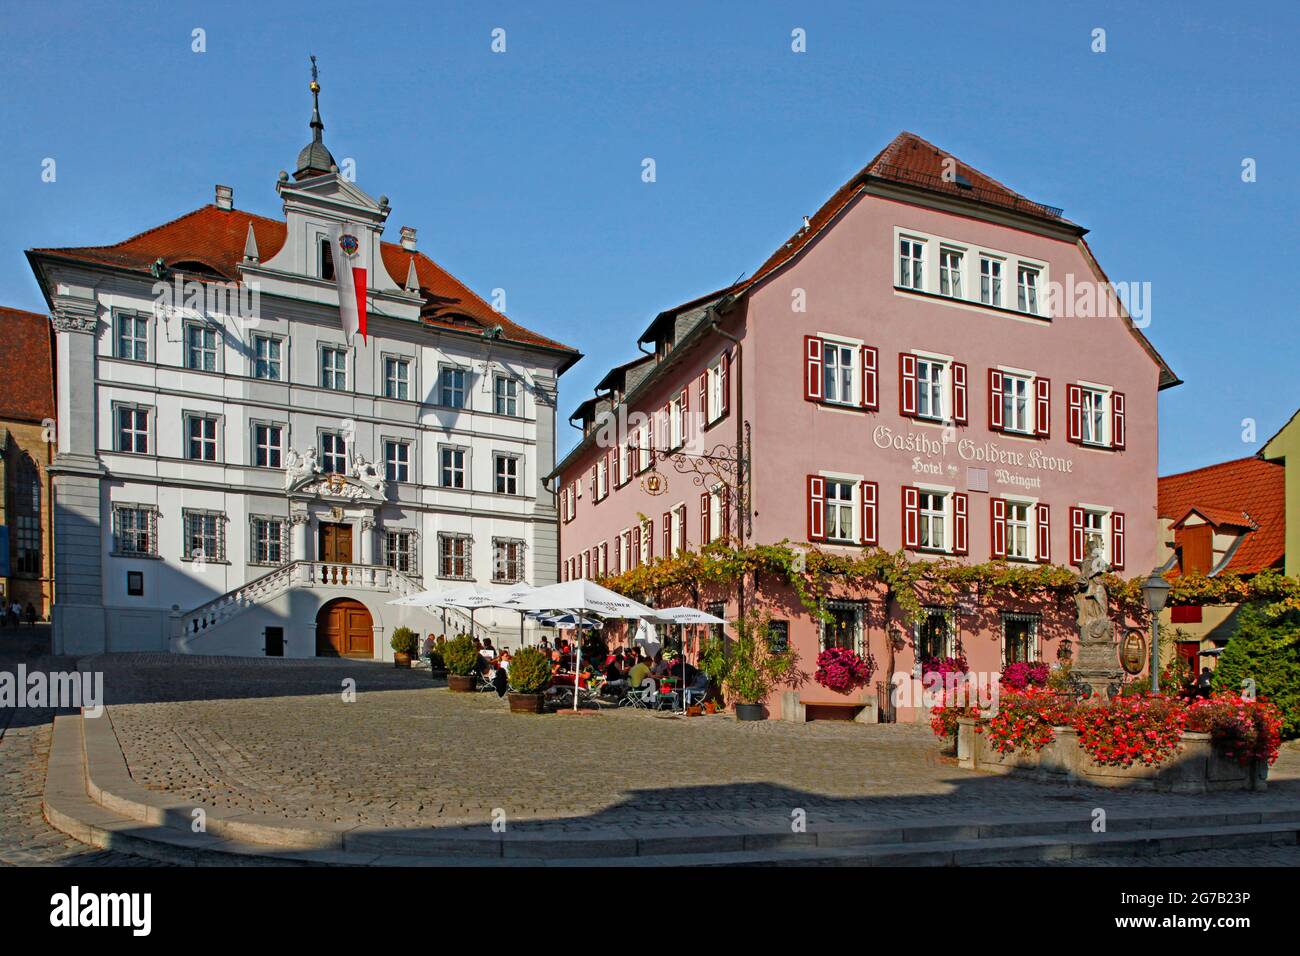 Market square, town hall, Gasthof Goldene Krone, Marienbrunnen, Iphofen, Lower Franconia, Bavaria, Germany Stock Photo